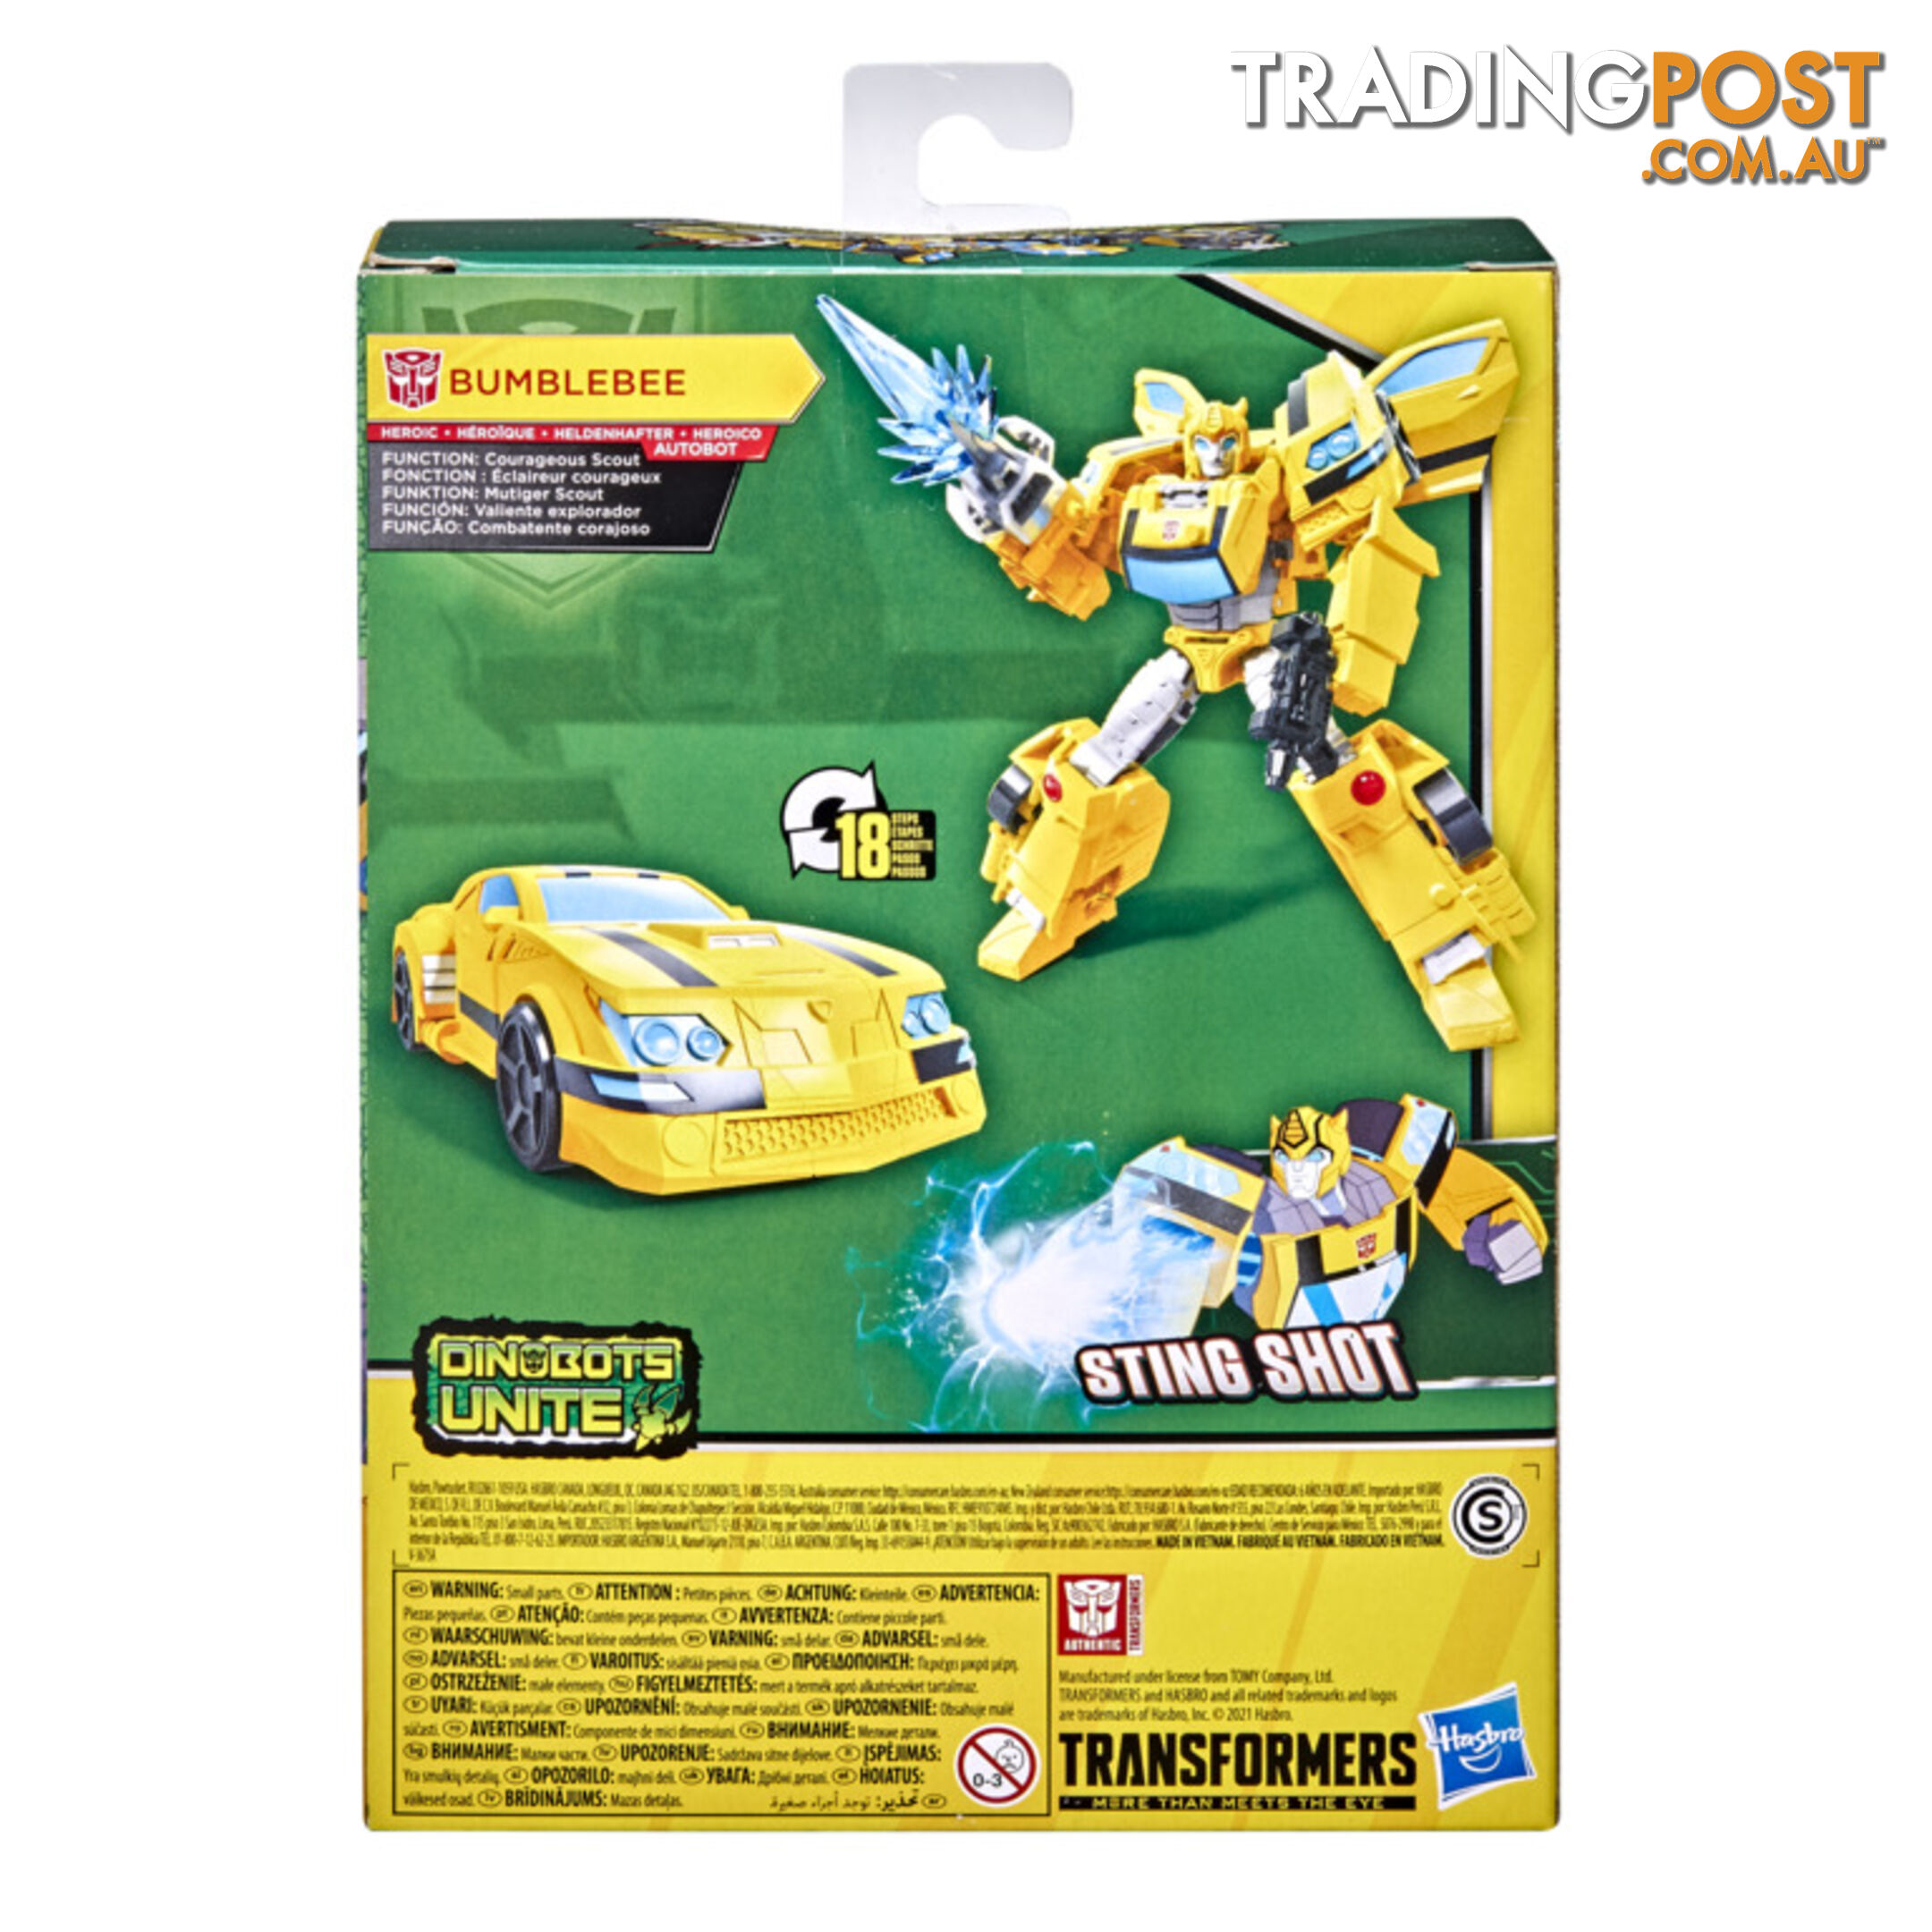 Transformers Bumblebee Cyberverse Adventures Bumblebee - Hbe70535e7099 - 5010993866861